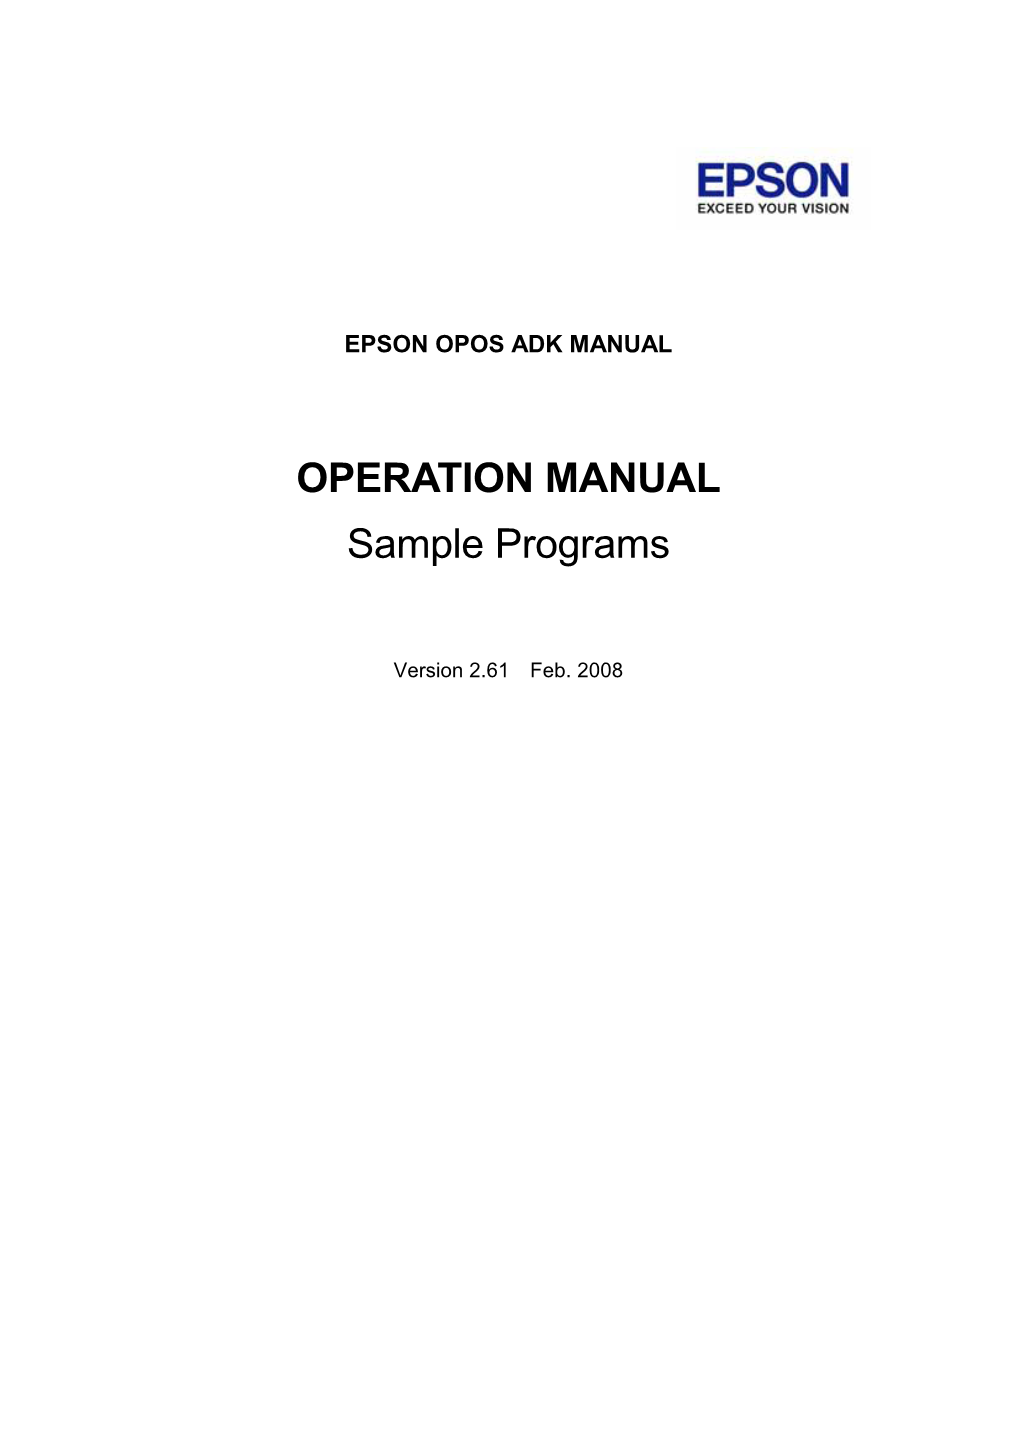 Epson OPOS ADK Manual V2.61175.56 KB